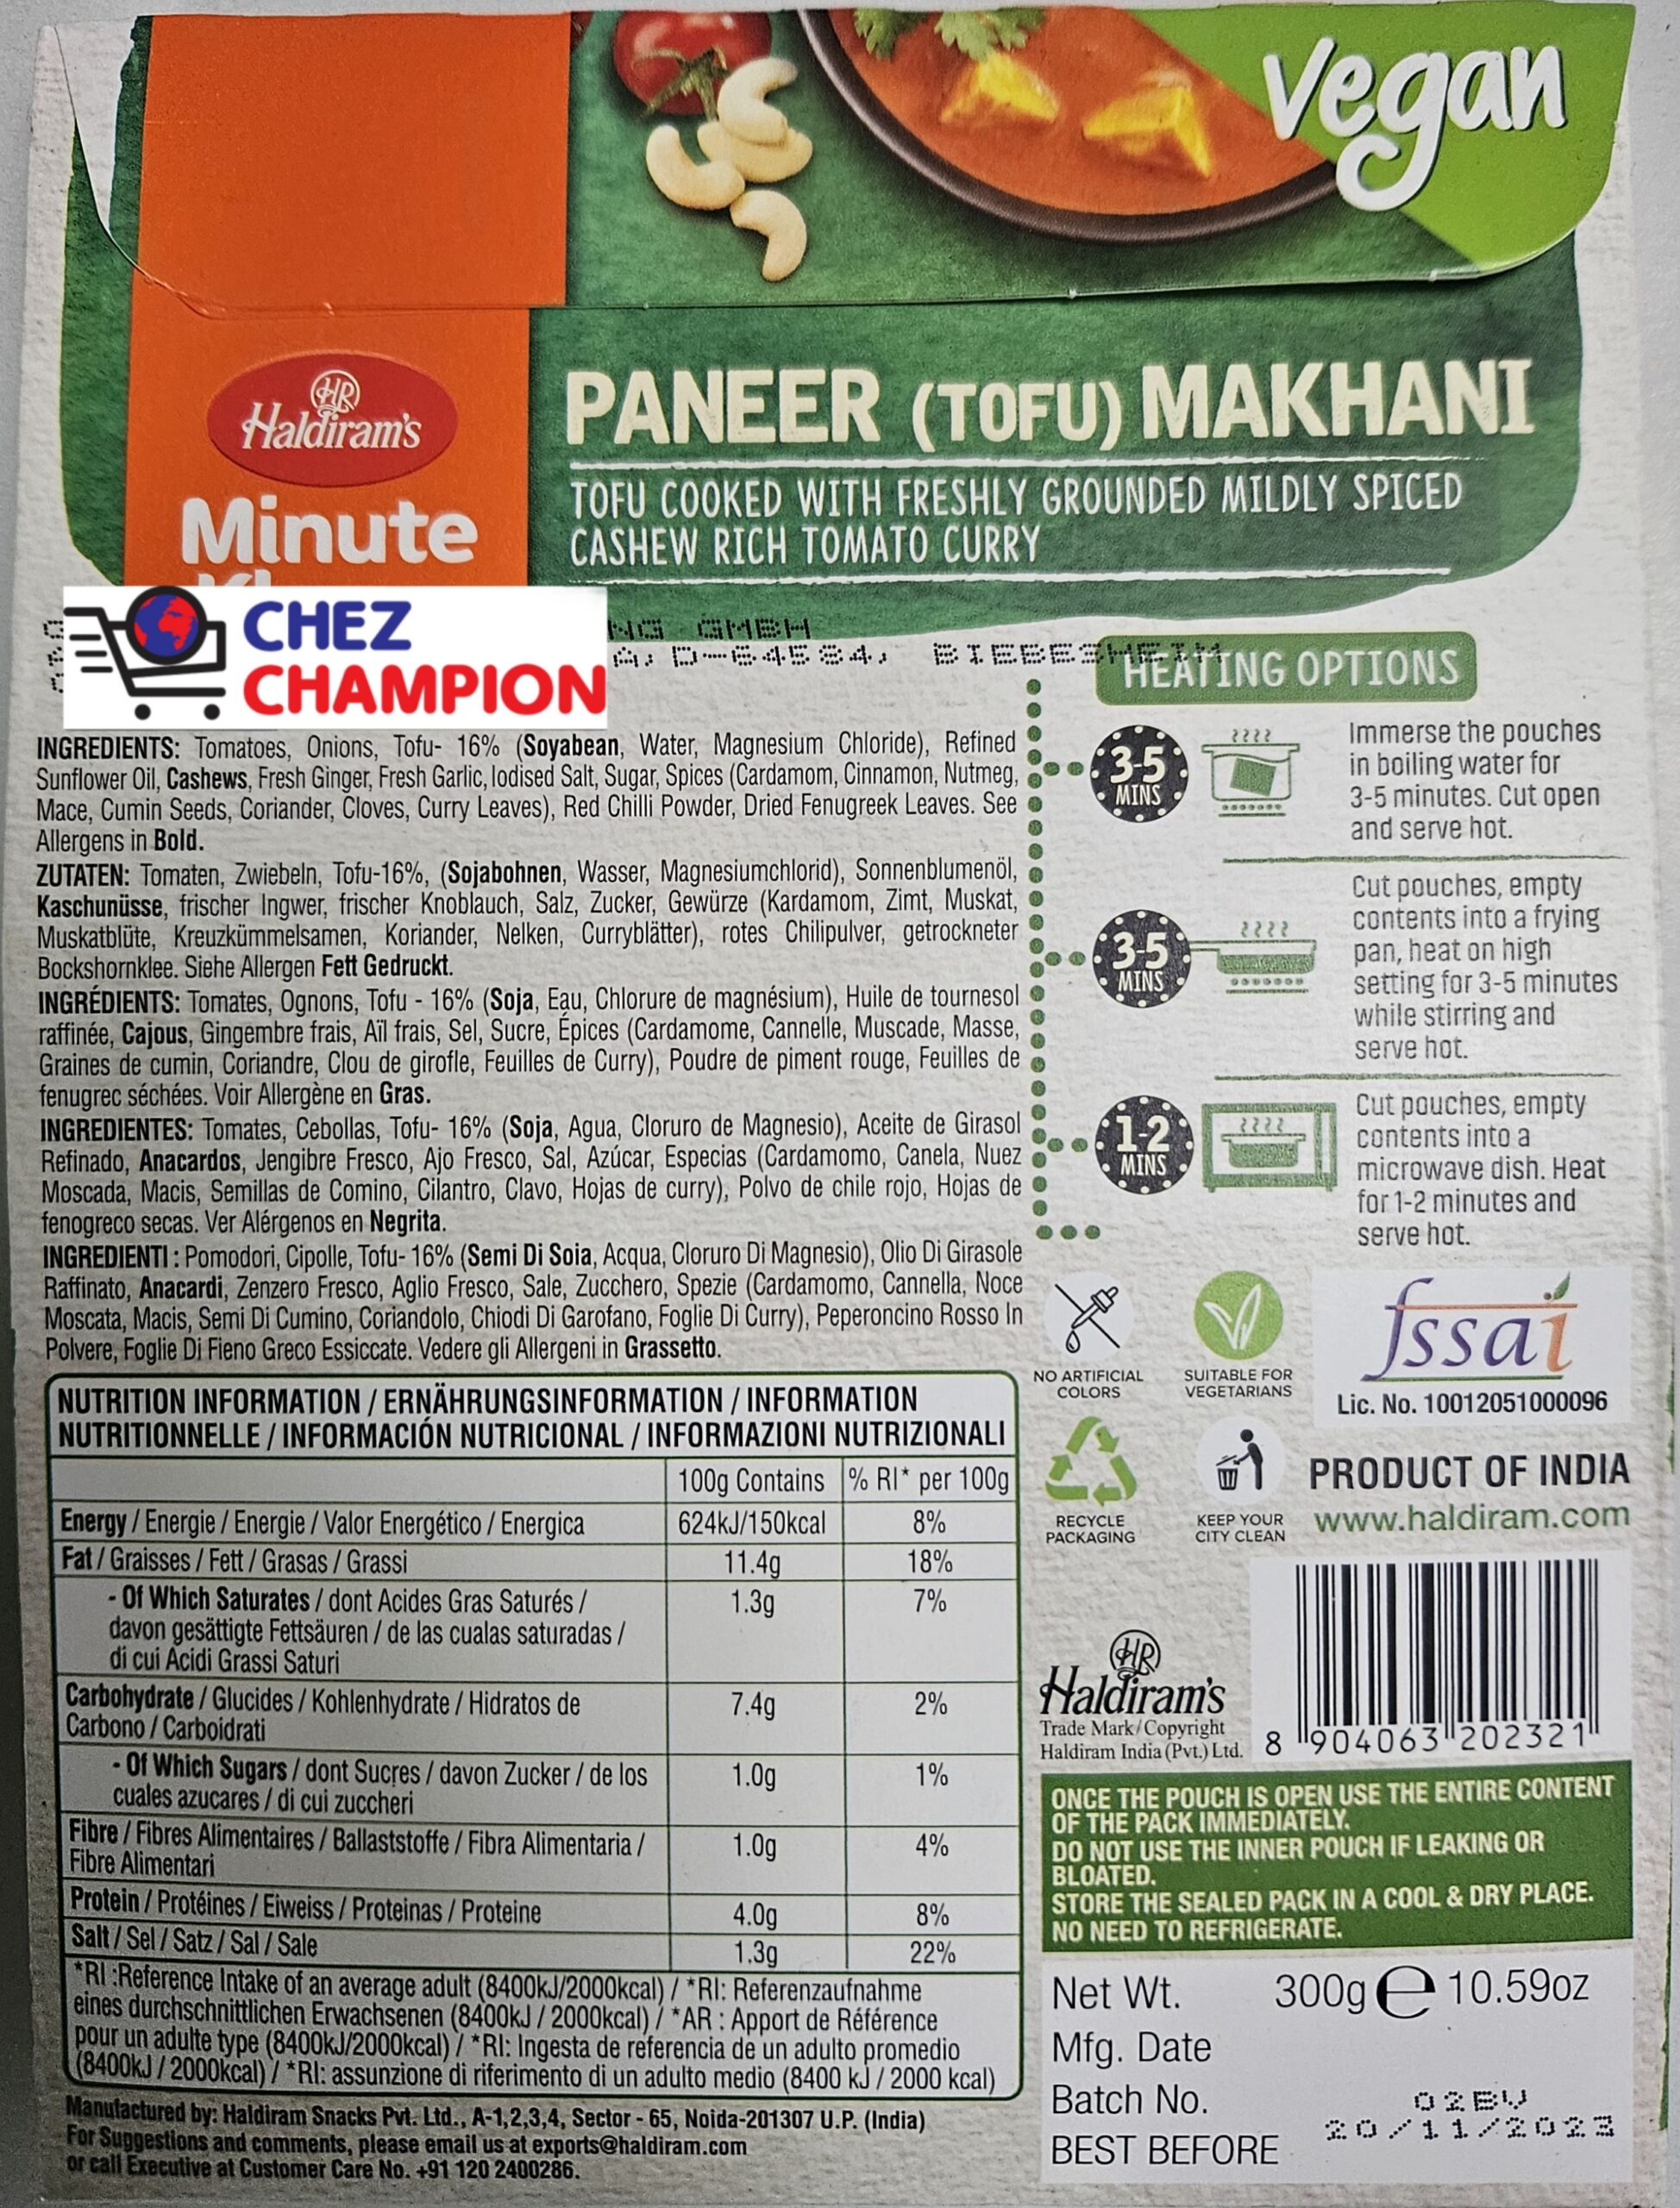 Haldiram’s paneer (tofu) makhani – 300g